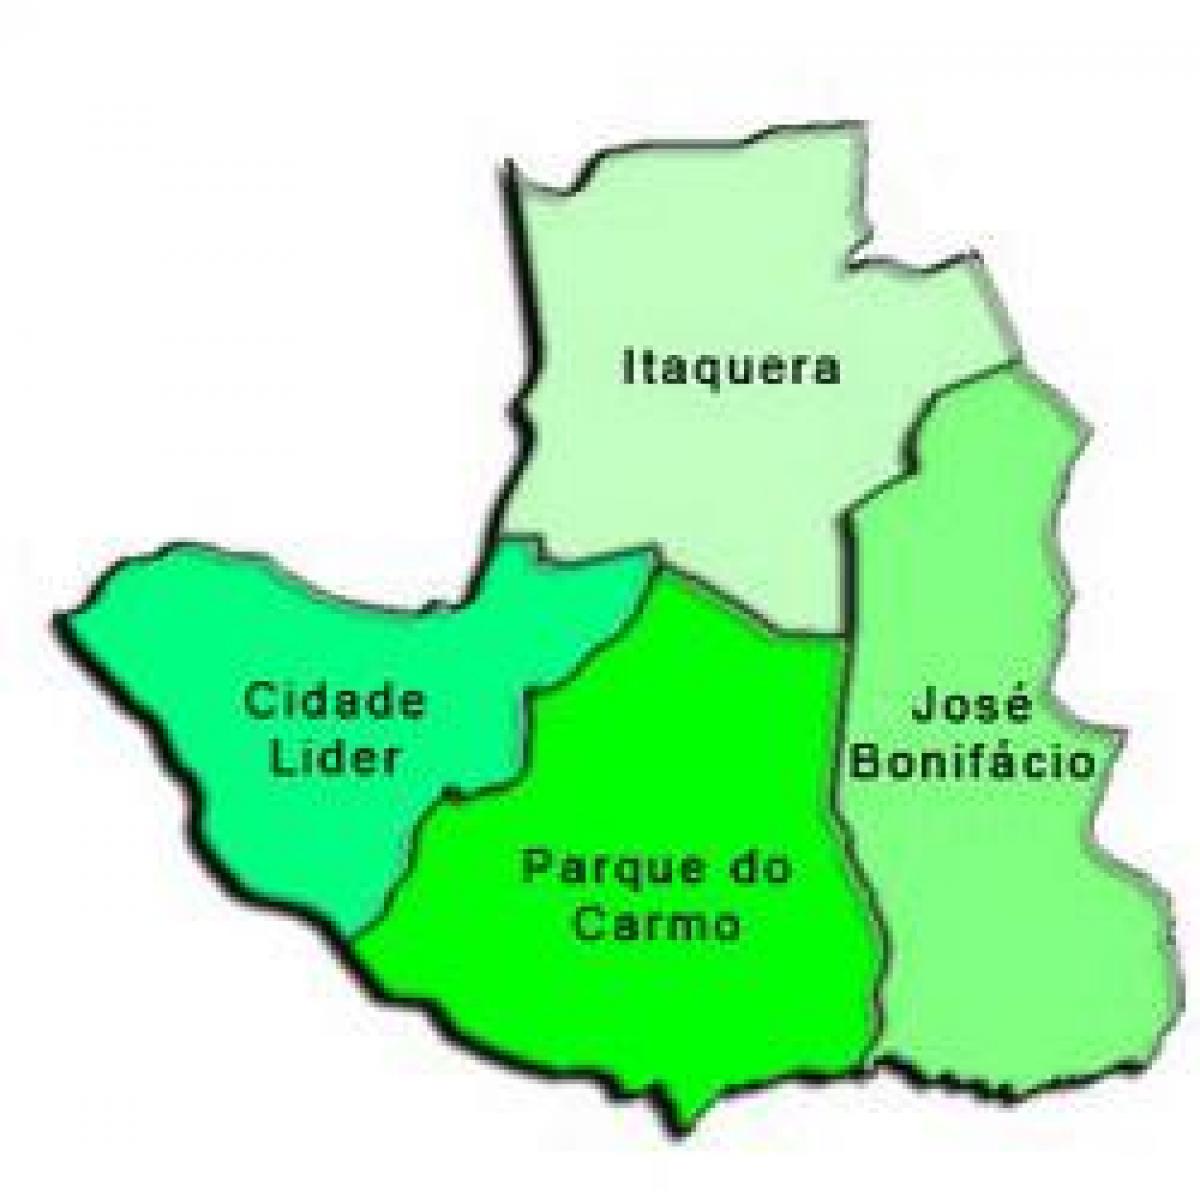 Kort over Itaquera sub-præfekturet